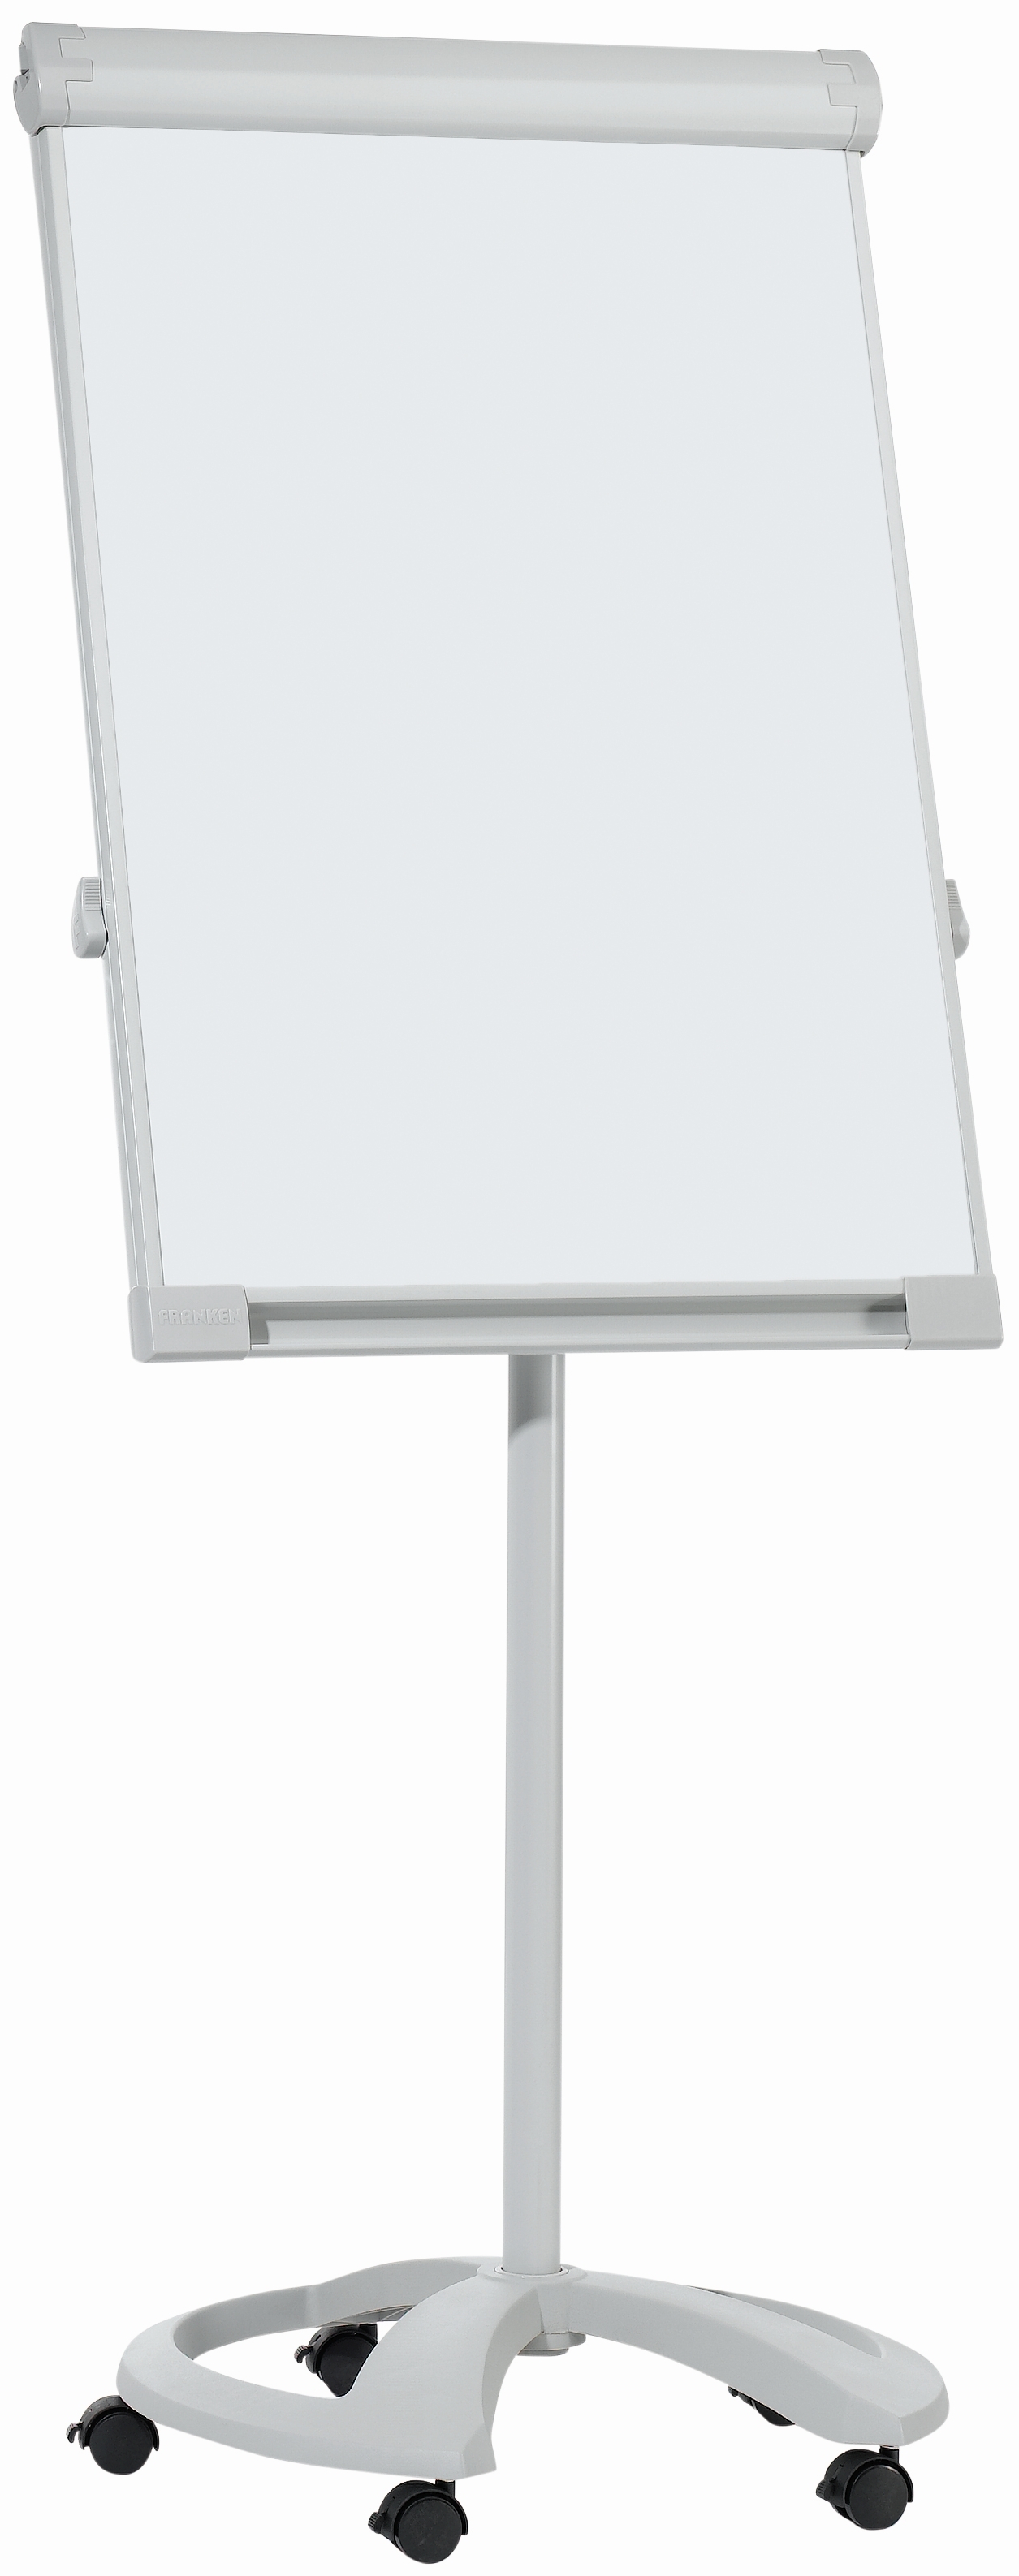 FRANKEN Tableau paperboard Deluxe FC81 Mobil 67x95cm,gris clair Mobil 67x95cm,gris clair